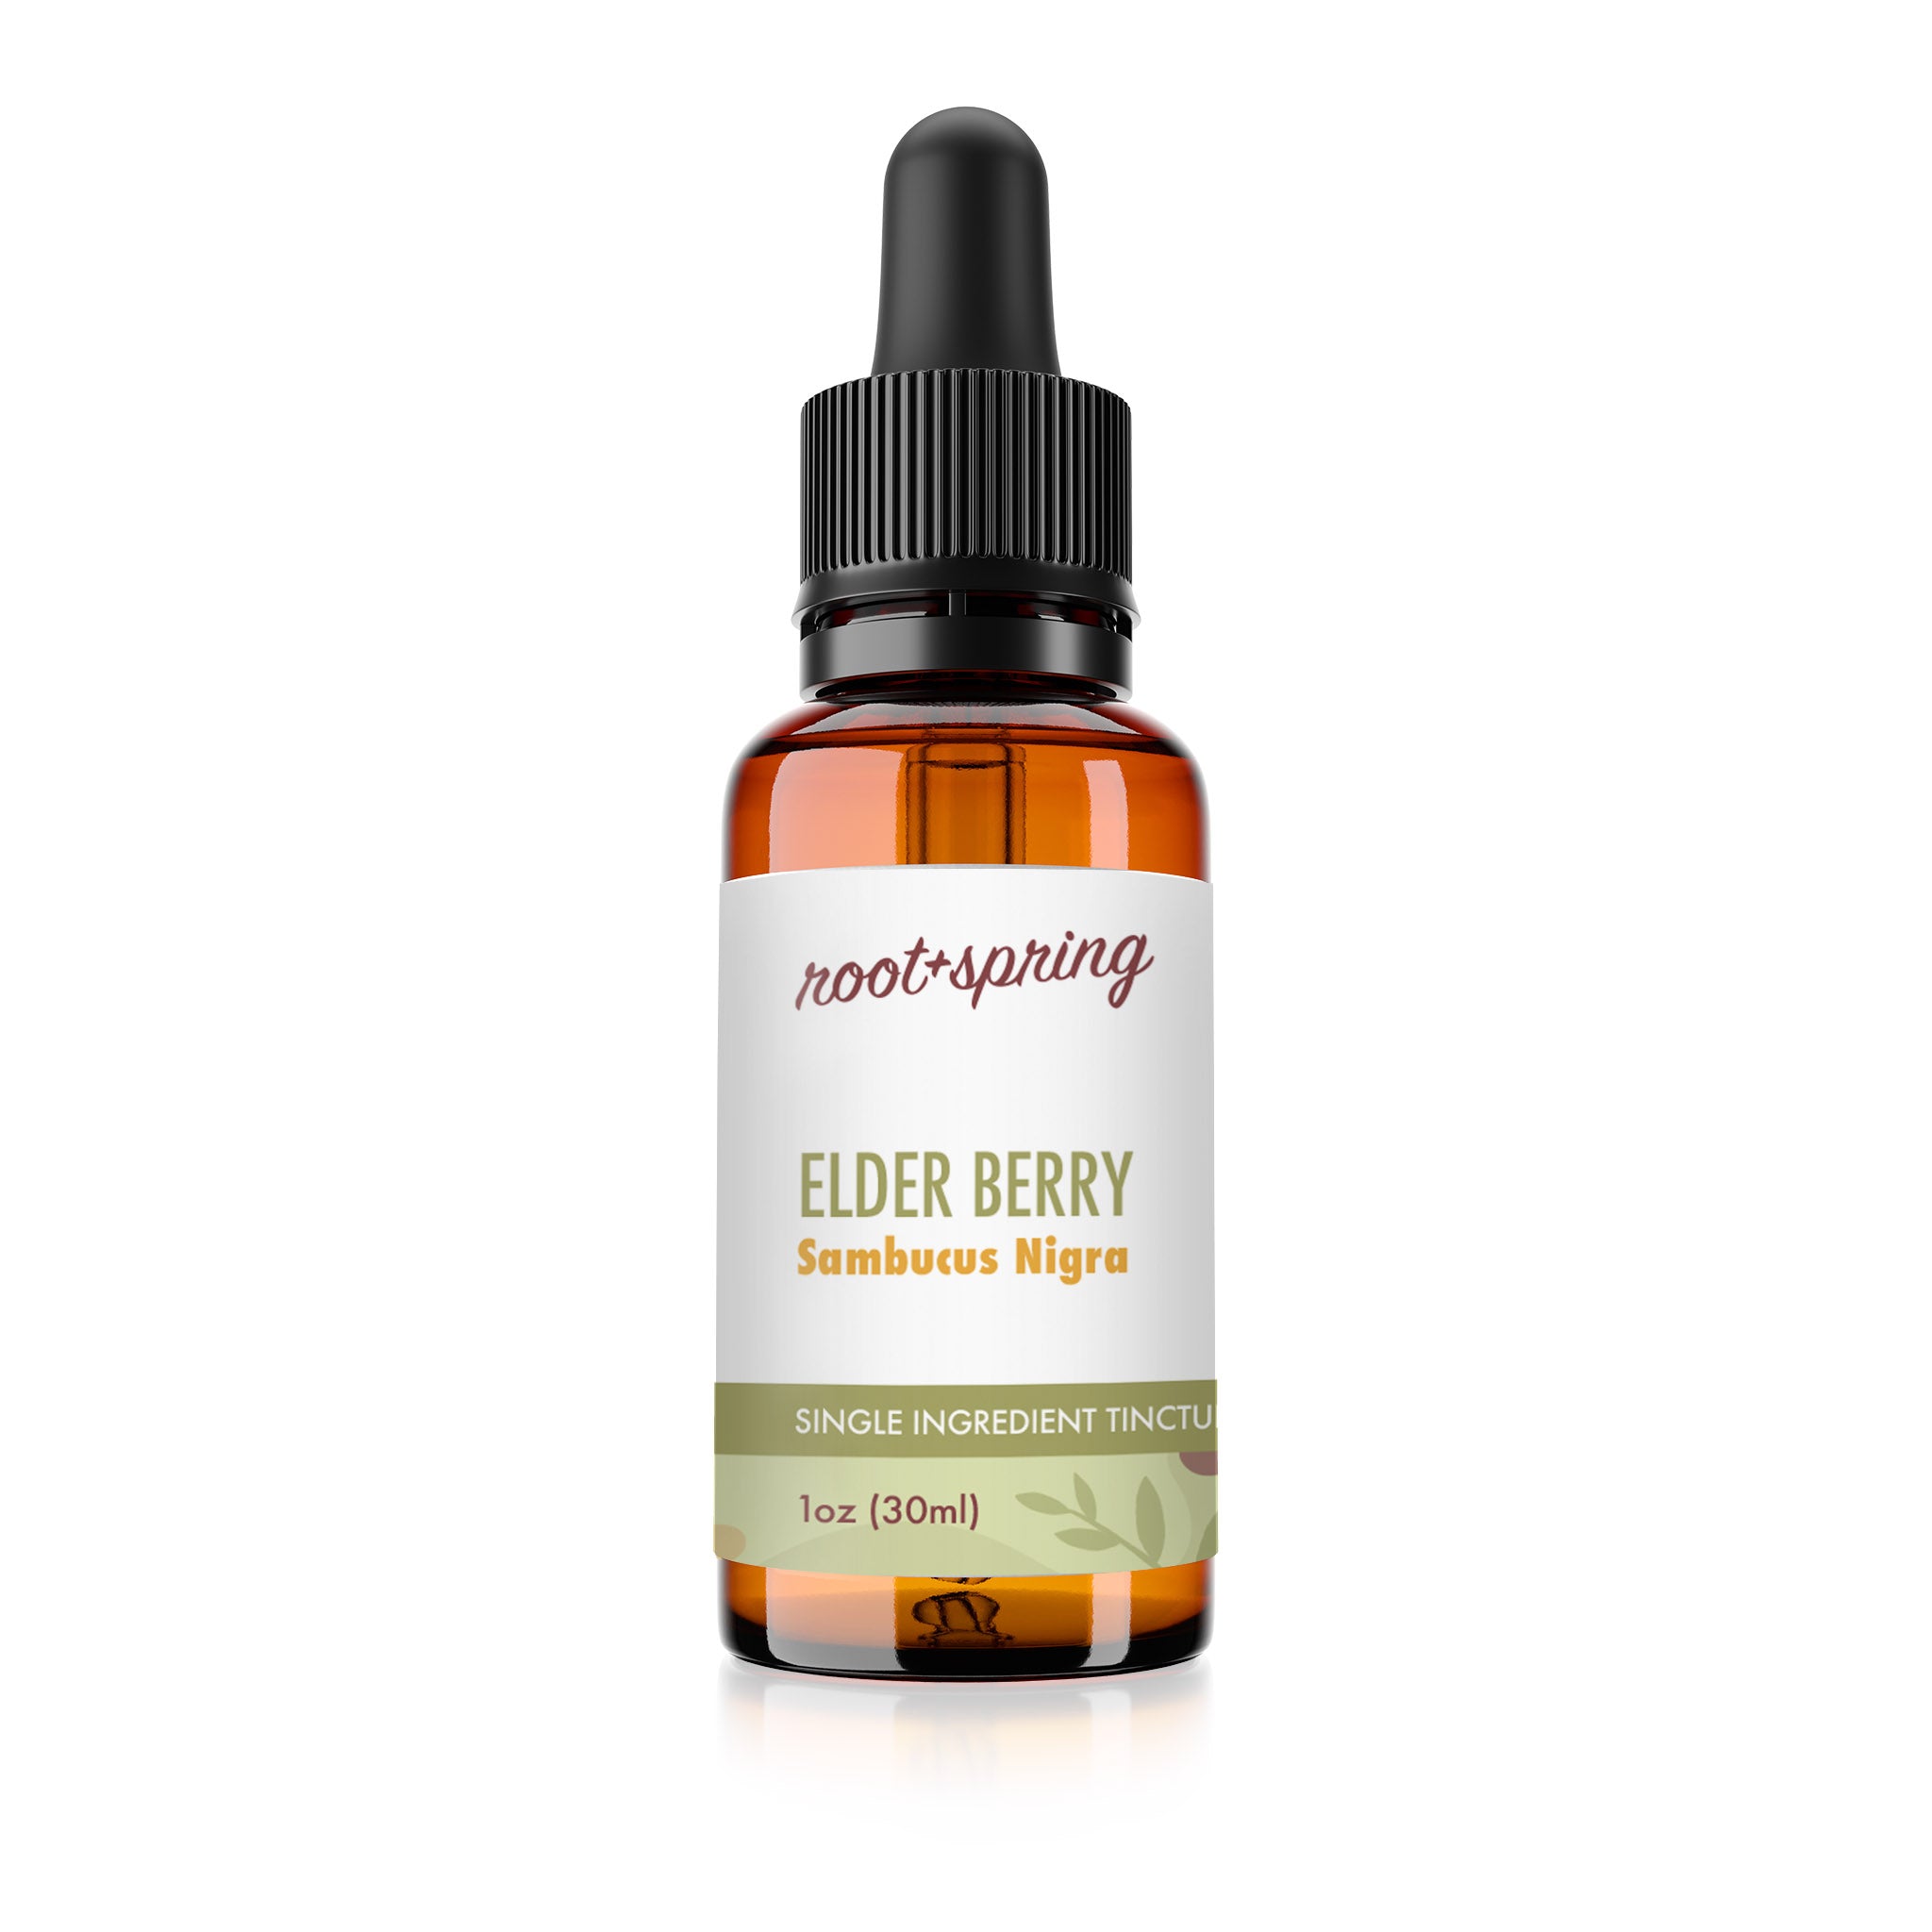 Bottle of Elder Berry (Sambucus Nigra) - Herbal Tincture by root + spring